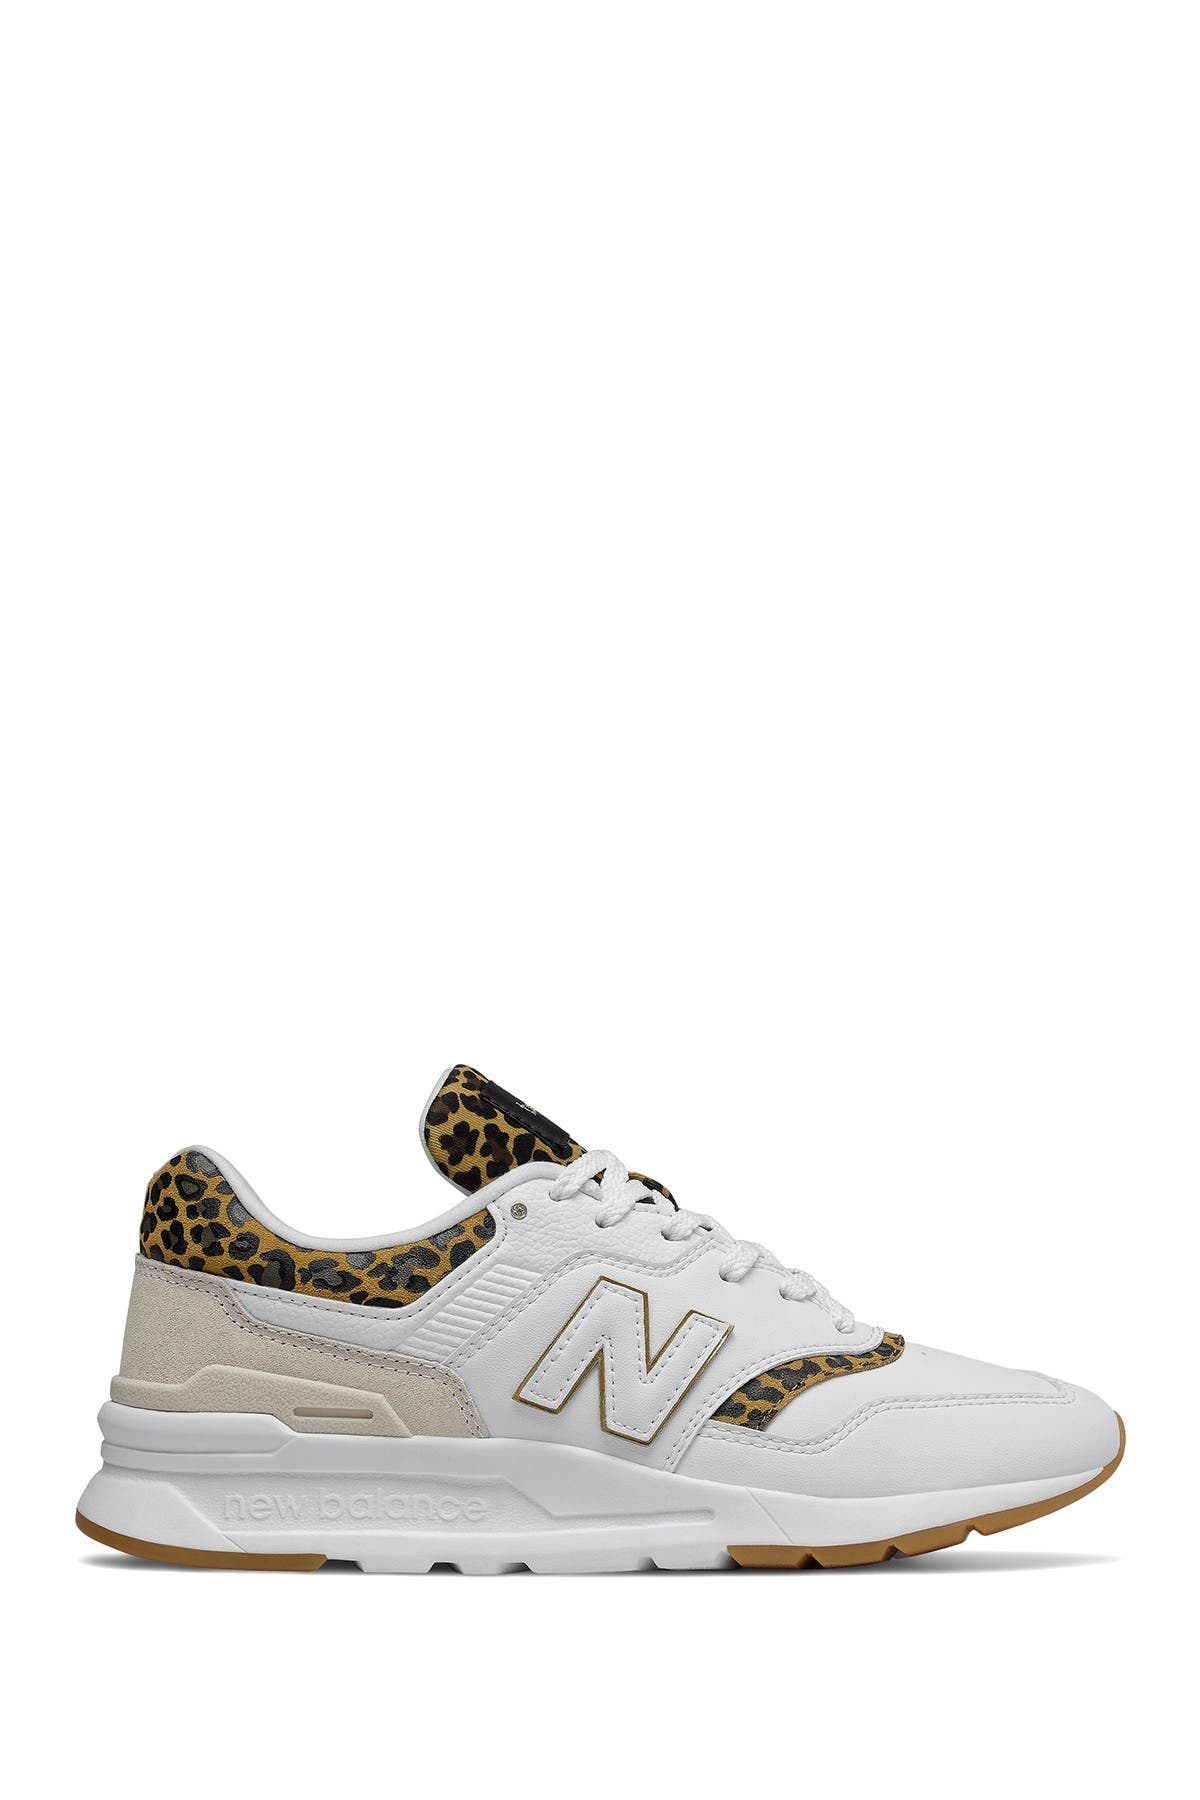 New Balance | 997 Leopard Print Sneaker 